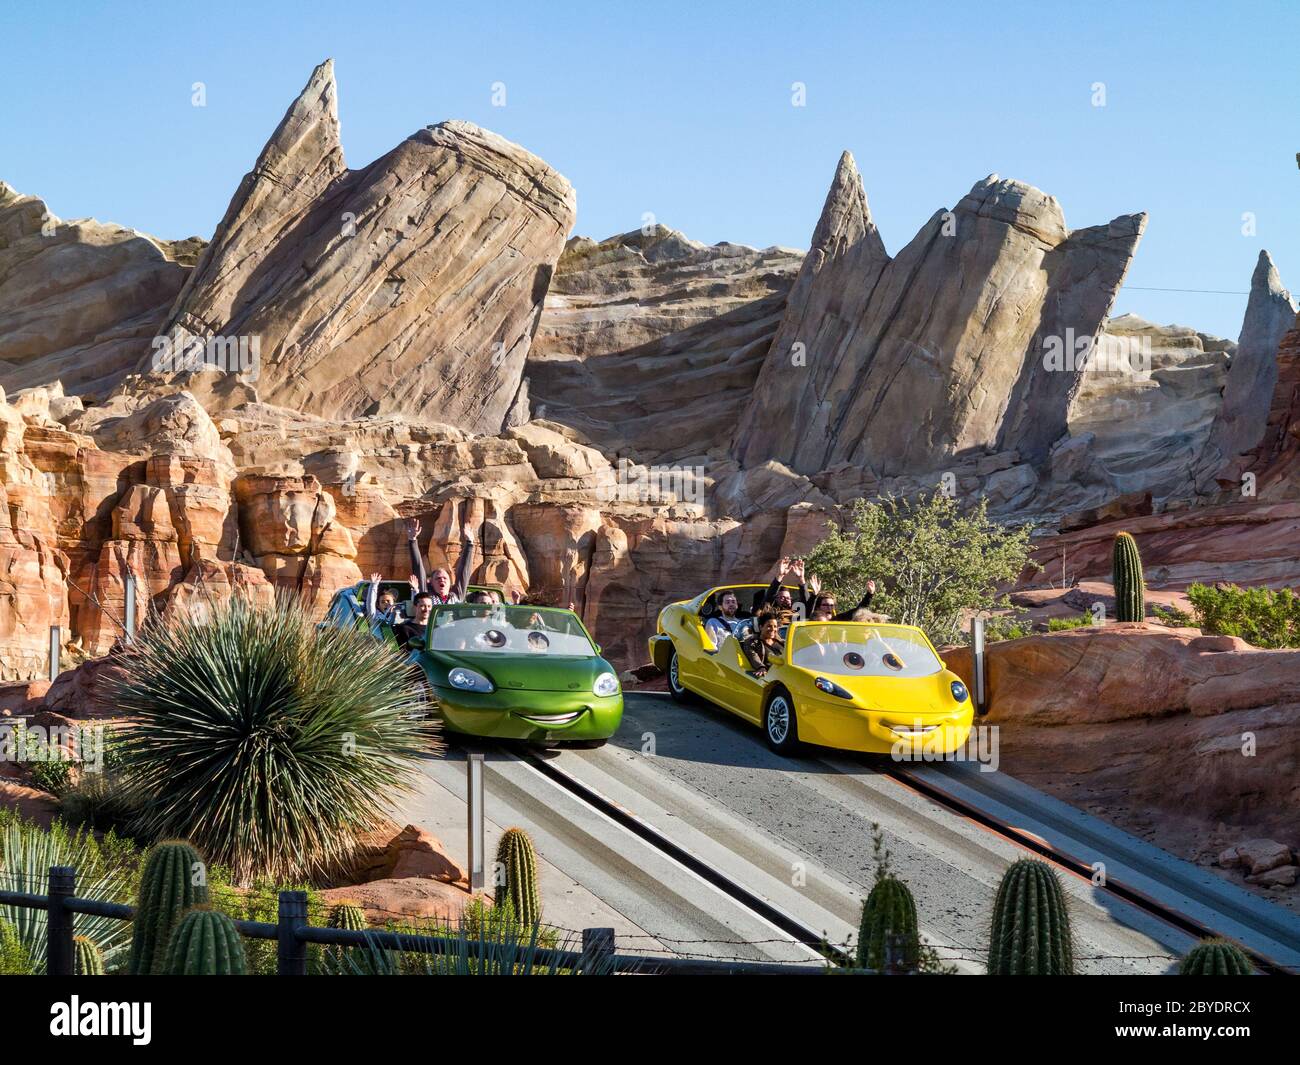 Radiator Springs Racers at Disney California Adventure Park — Theme Park IQ